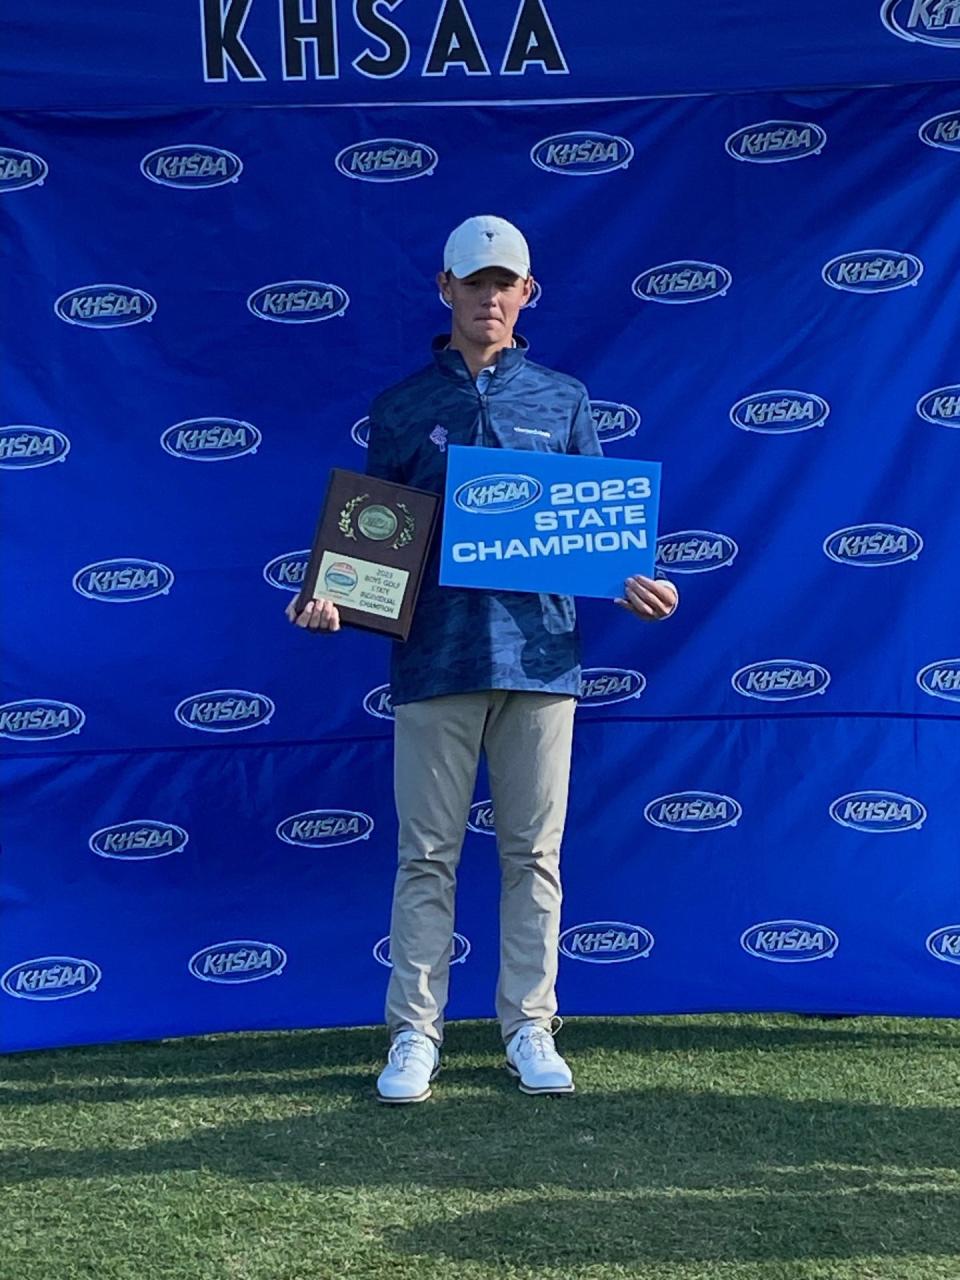 Christian Academy senior Brady Smith won the KHSAA boys golf state championship on Saturday at Bowling Green Country Club.